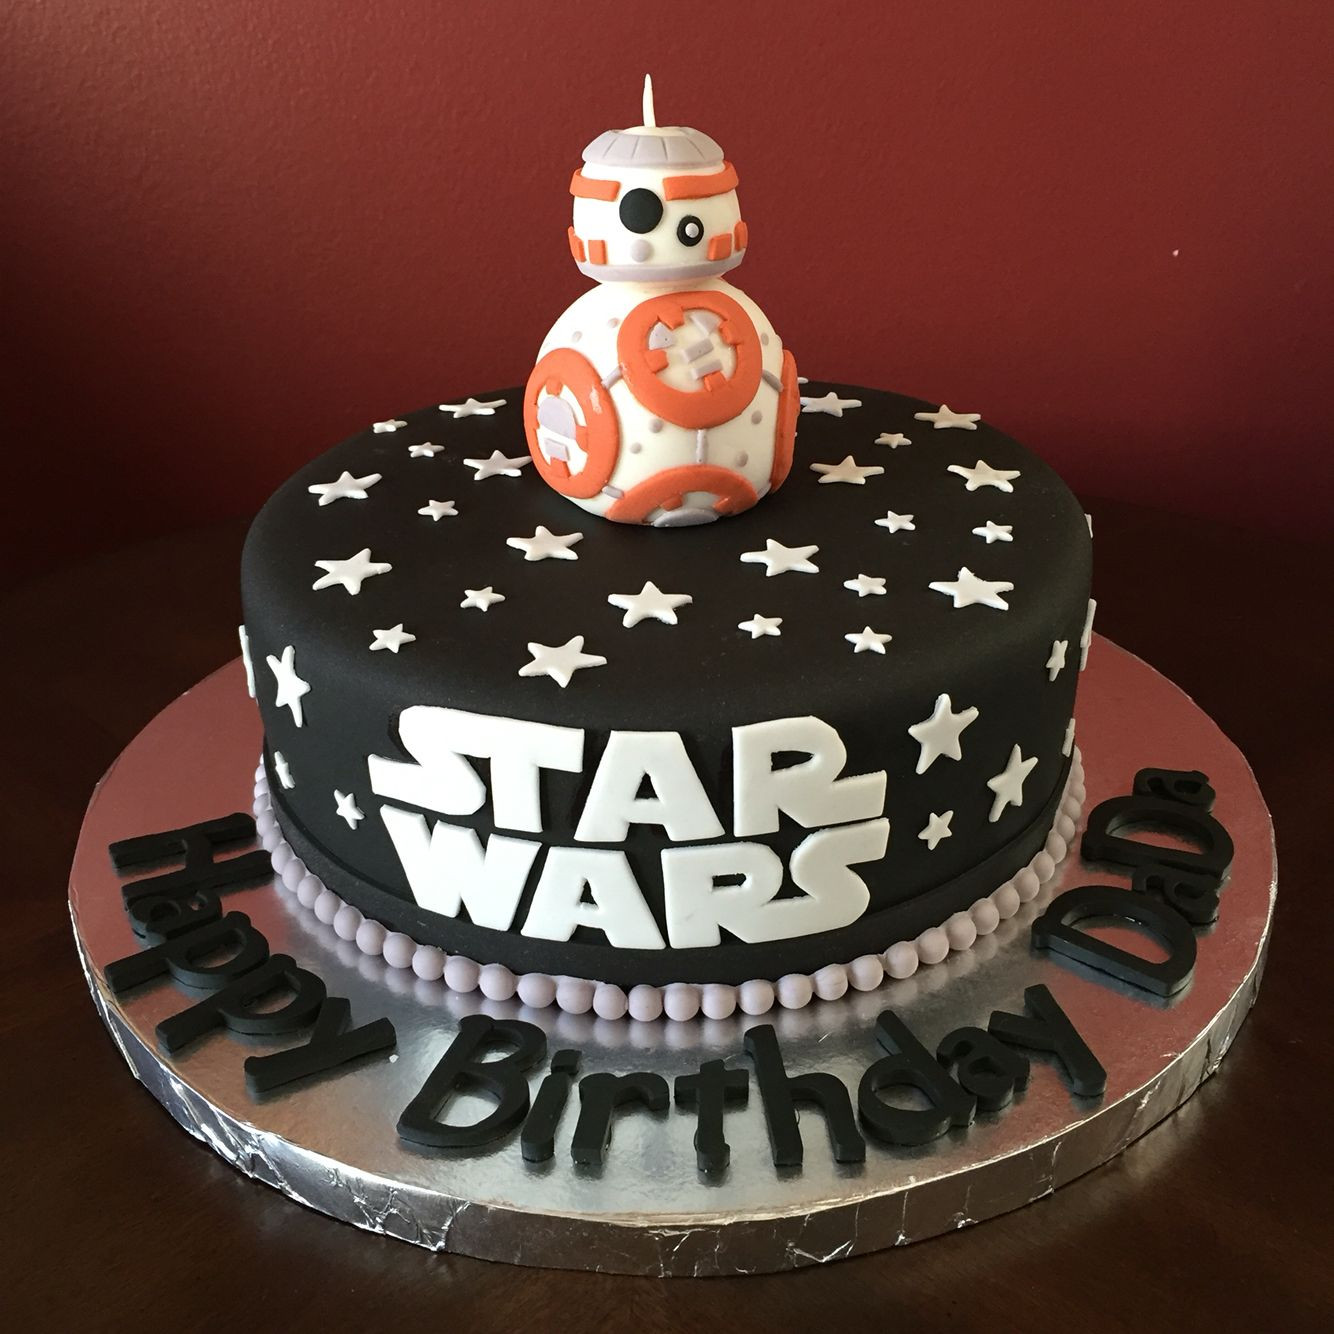 Star Wars Birthday Cake Decorations
 Star Wars BB 8 Birthday Cake